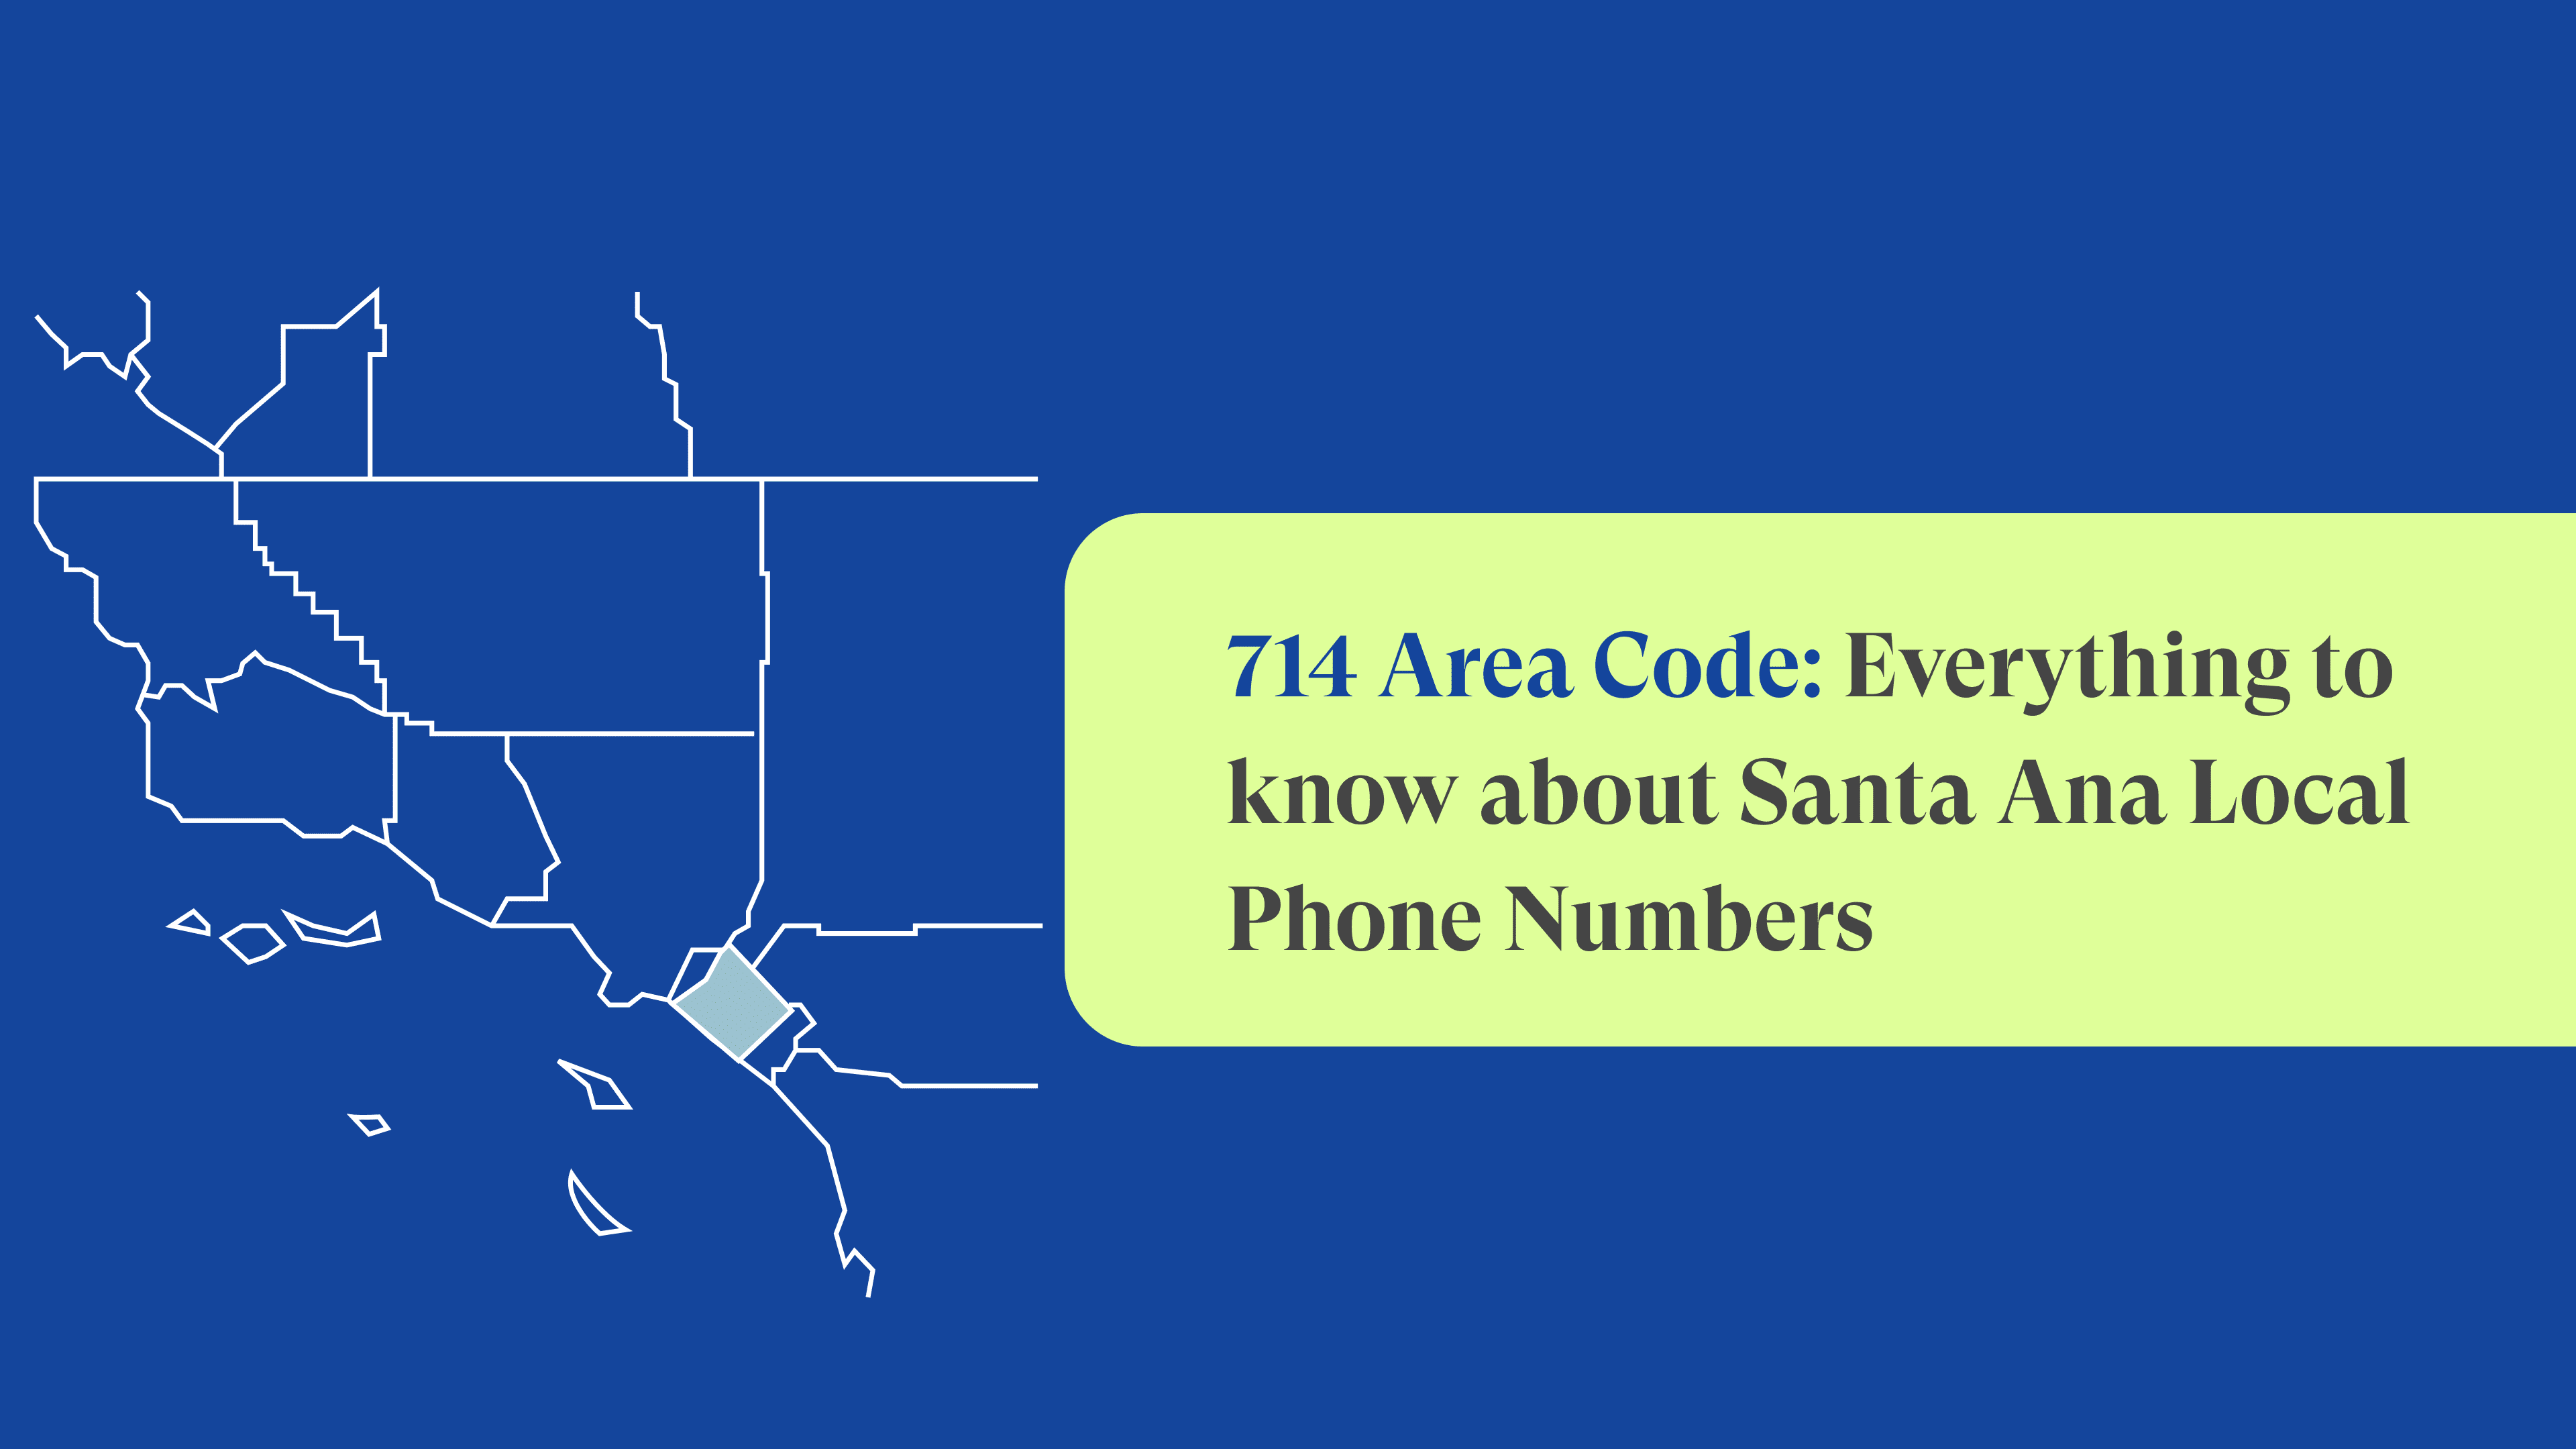 Area Code 714: Santa Ana Local Phone Numbers